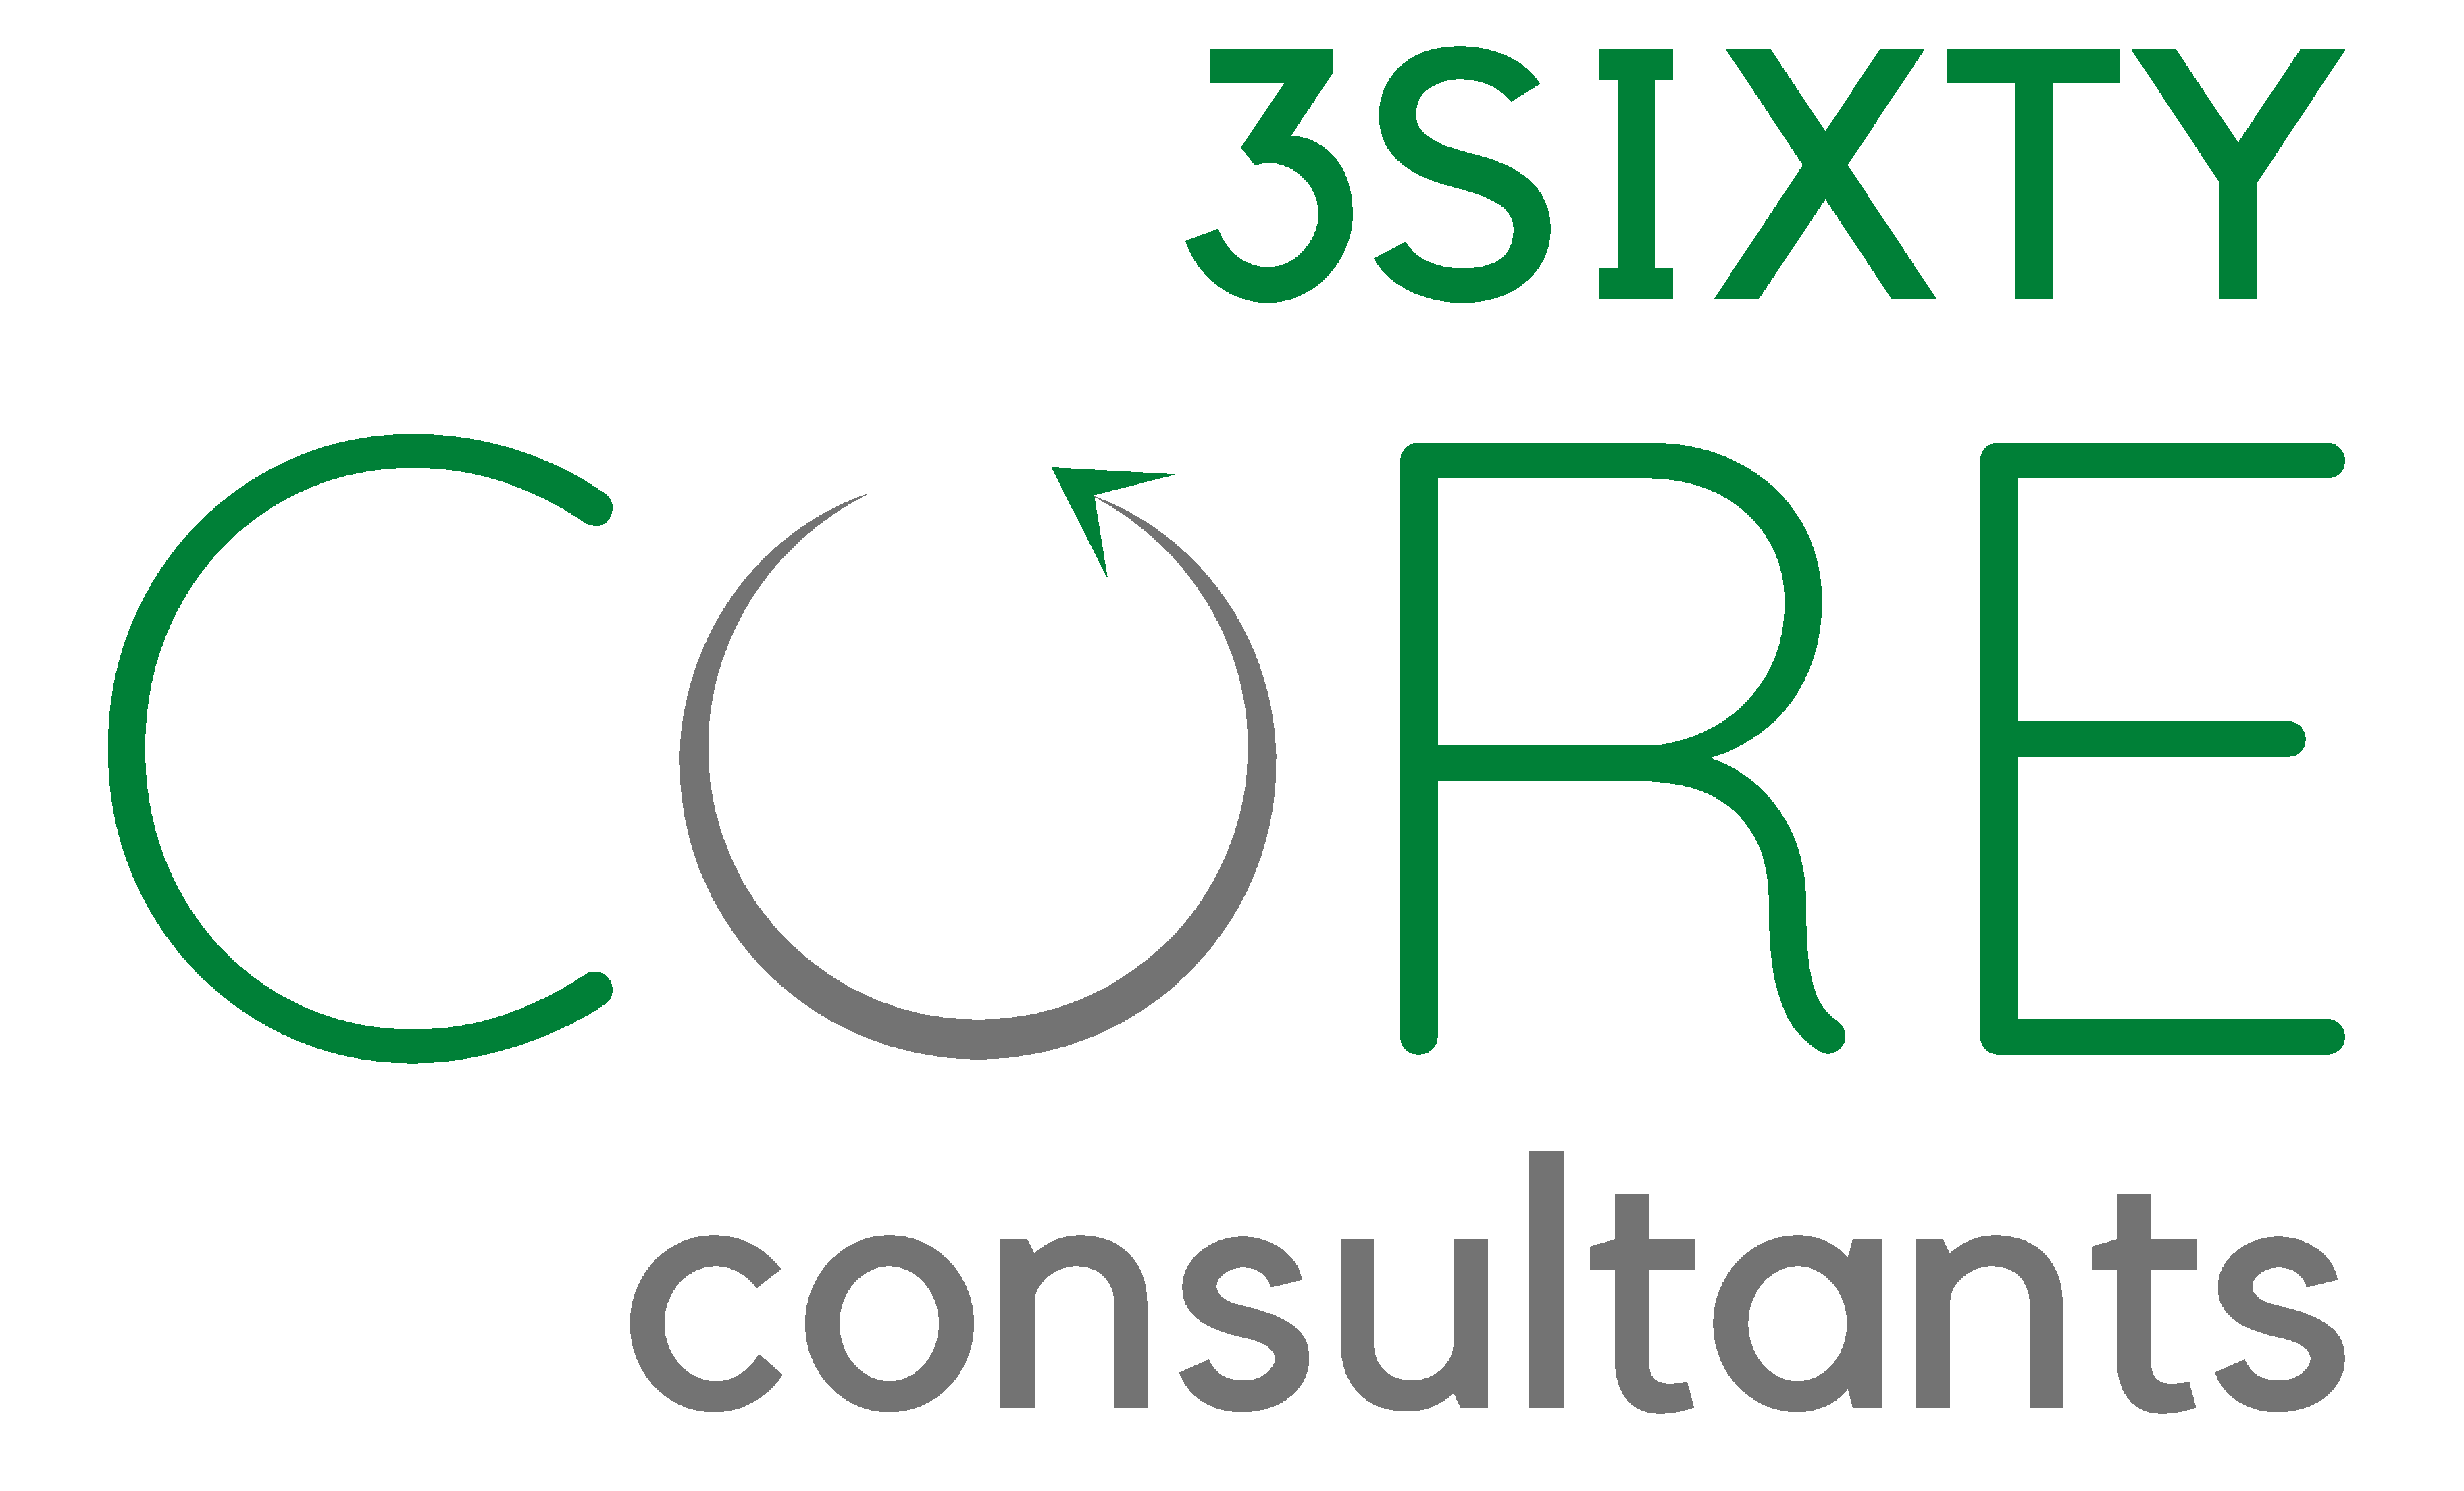 3SIXTY Core Consultants Malta